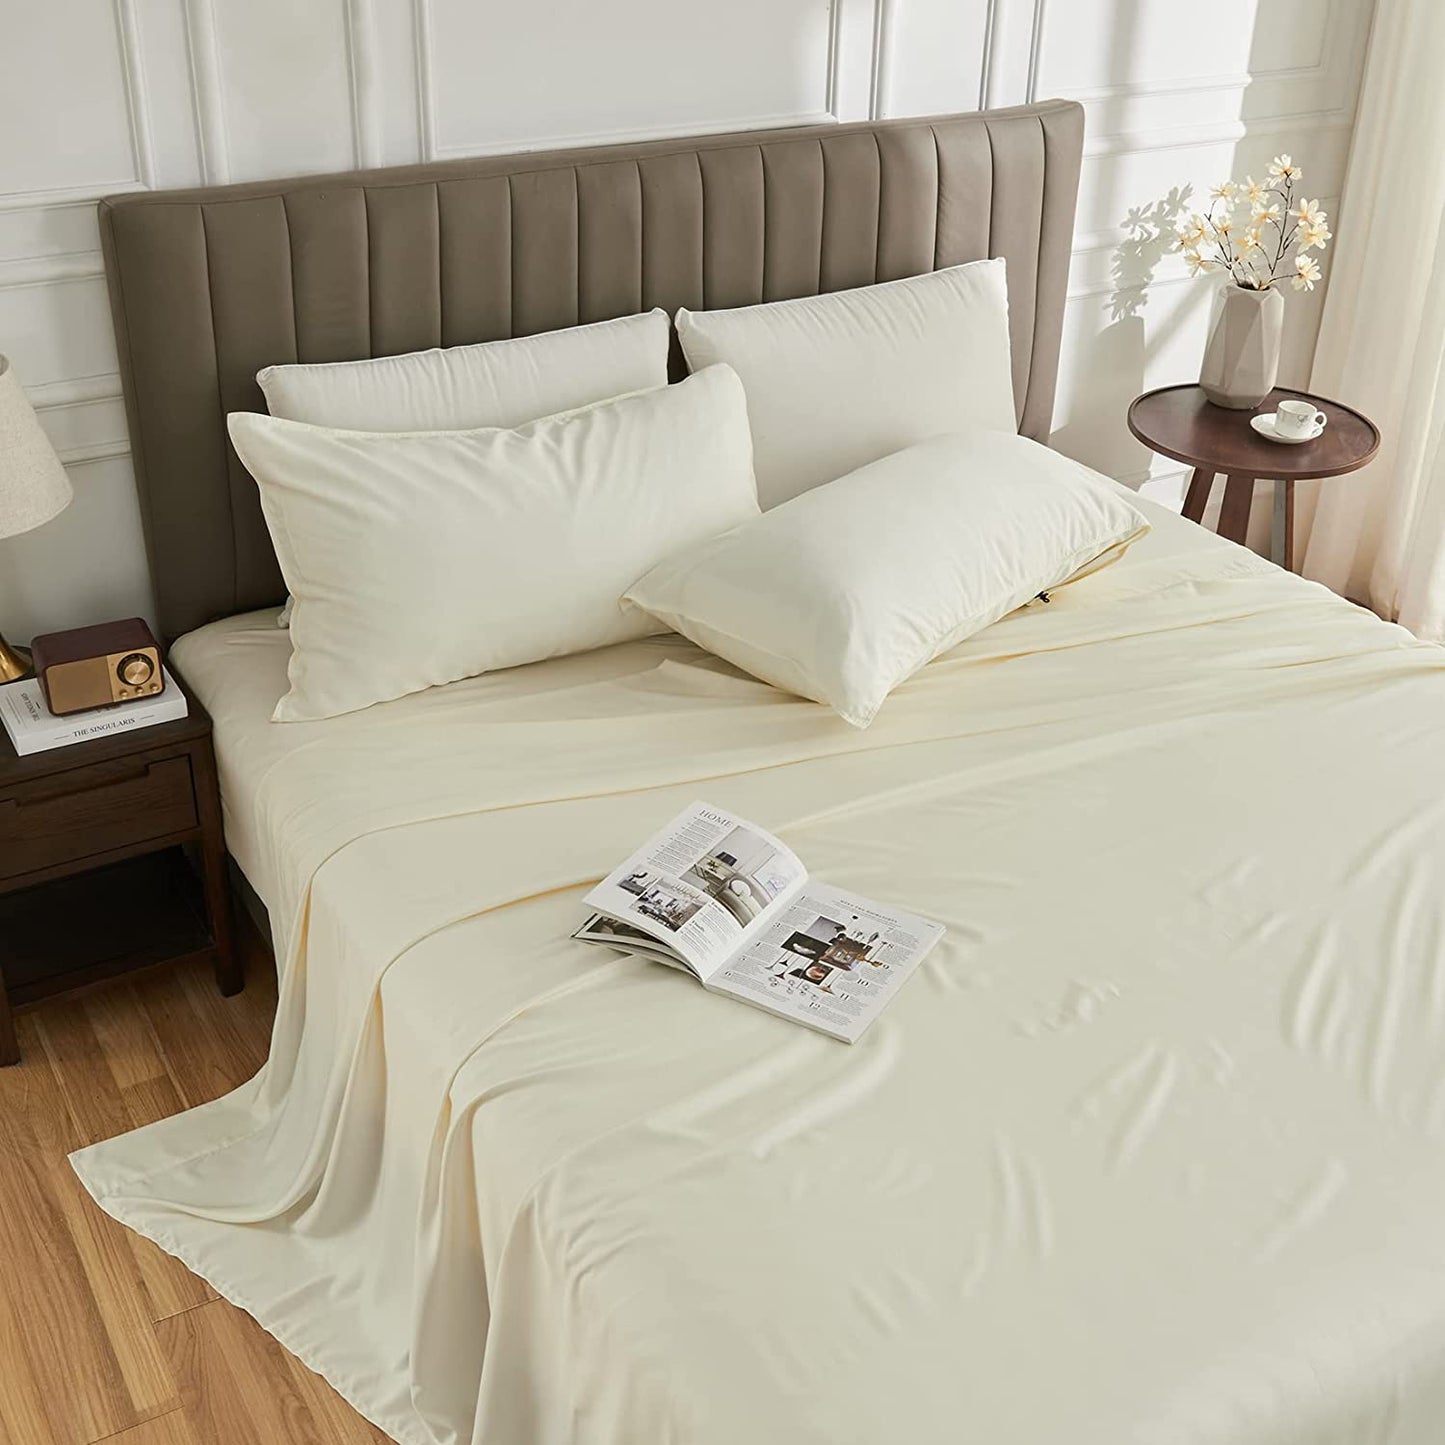 WOD FAMY King Size 100% Bamboo Sheet Set 16" Deep Pocket Cooling Breathable Bamboo Bed Sheets Soft Hotel Bedding Sheet Sets Light Blue